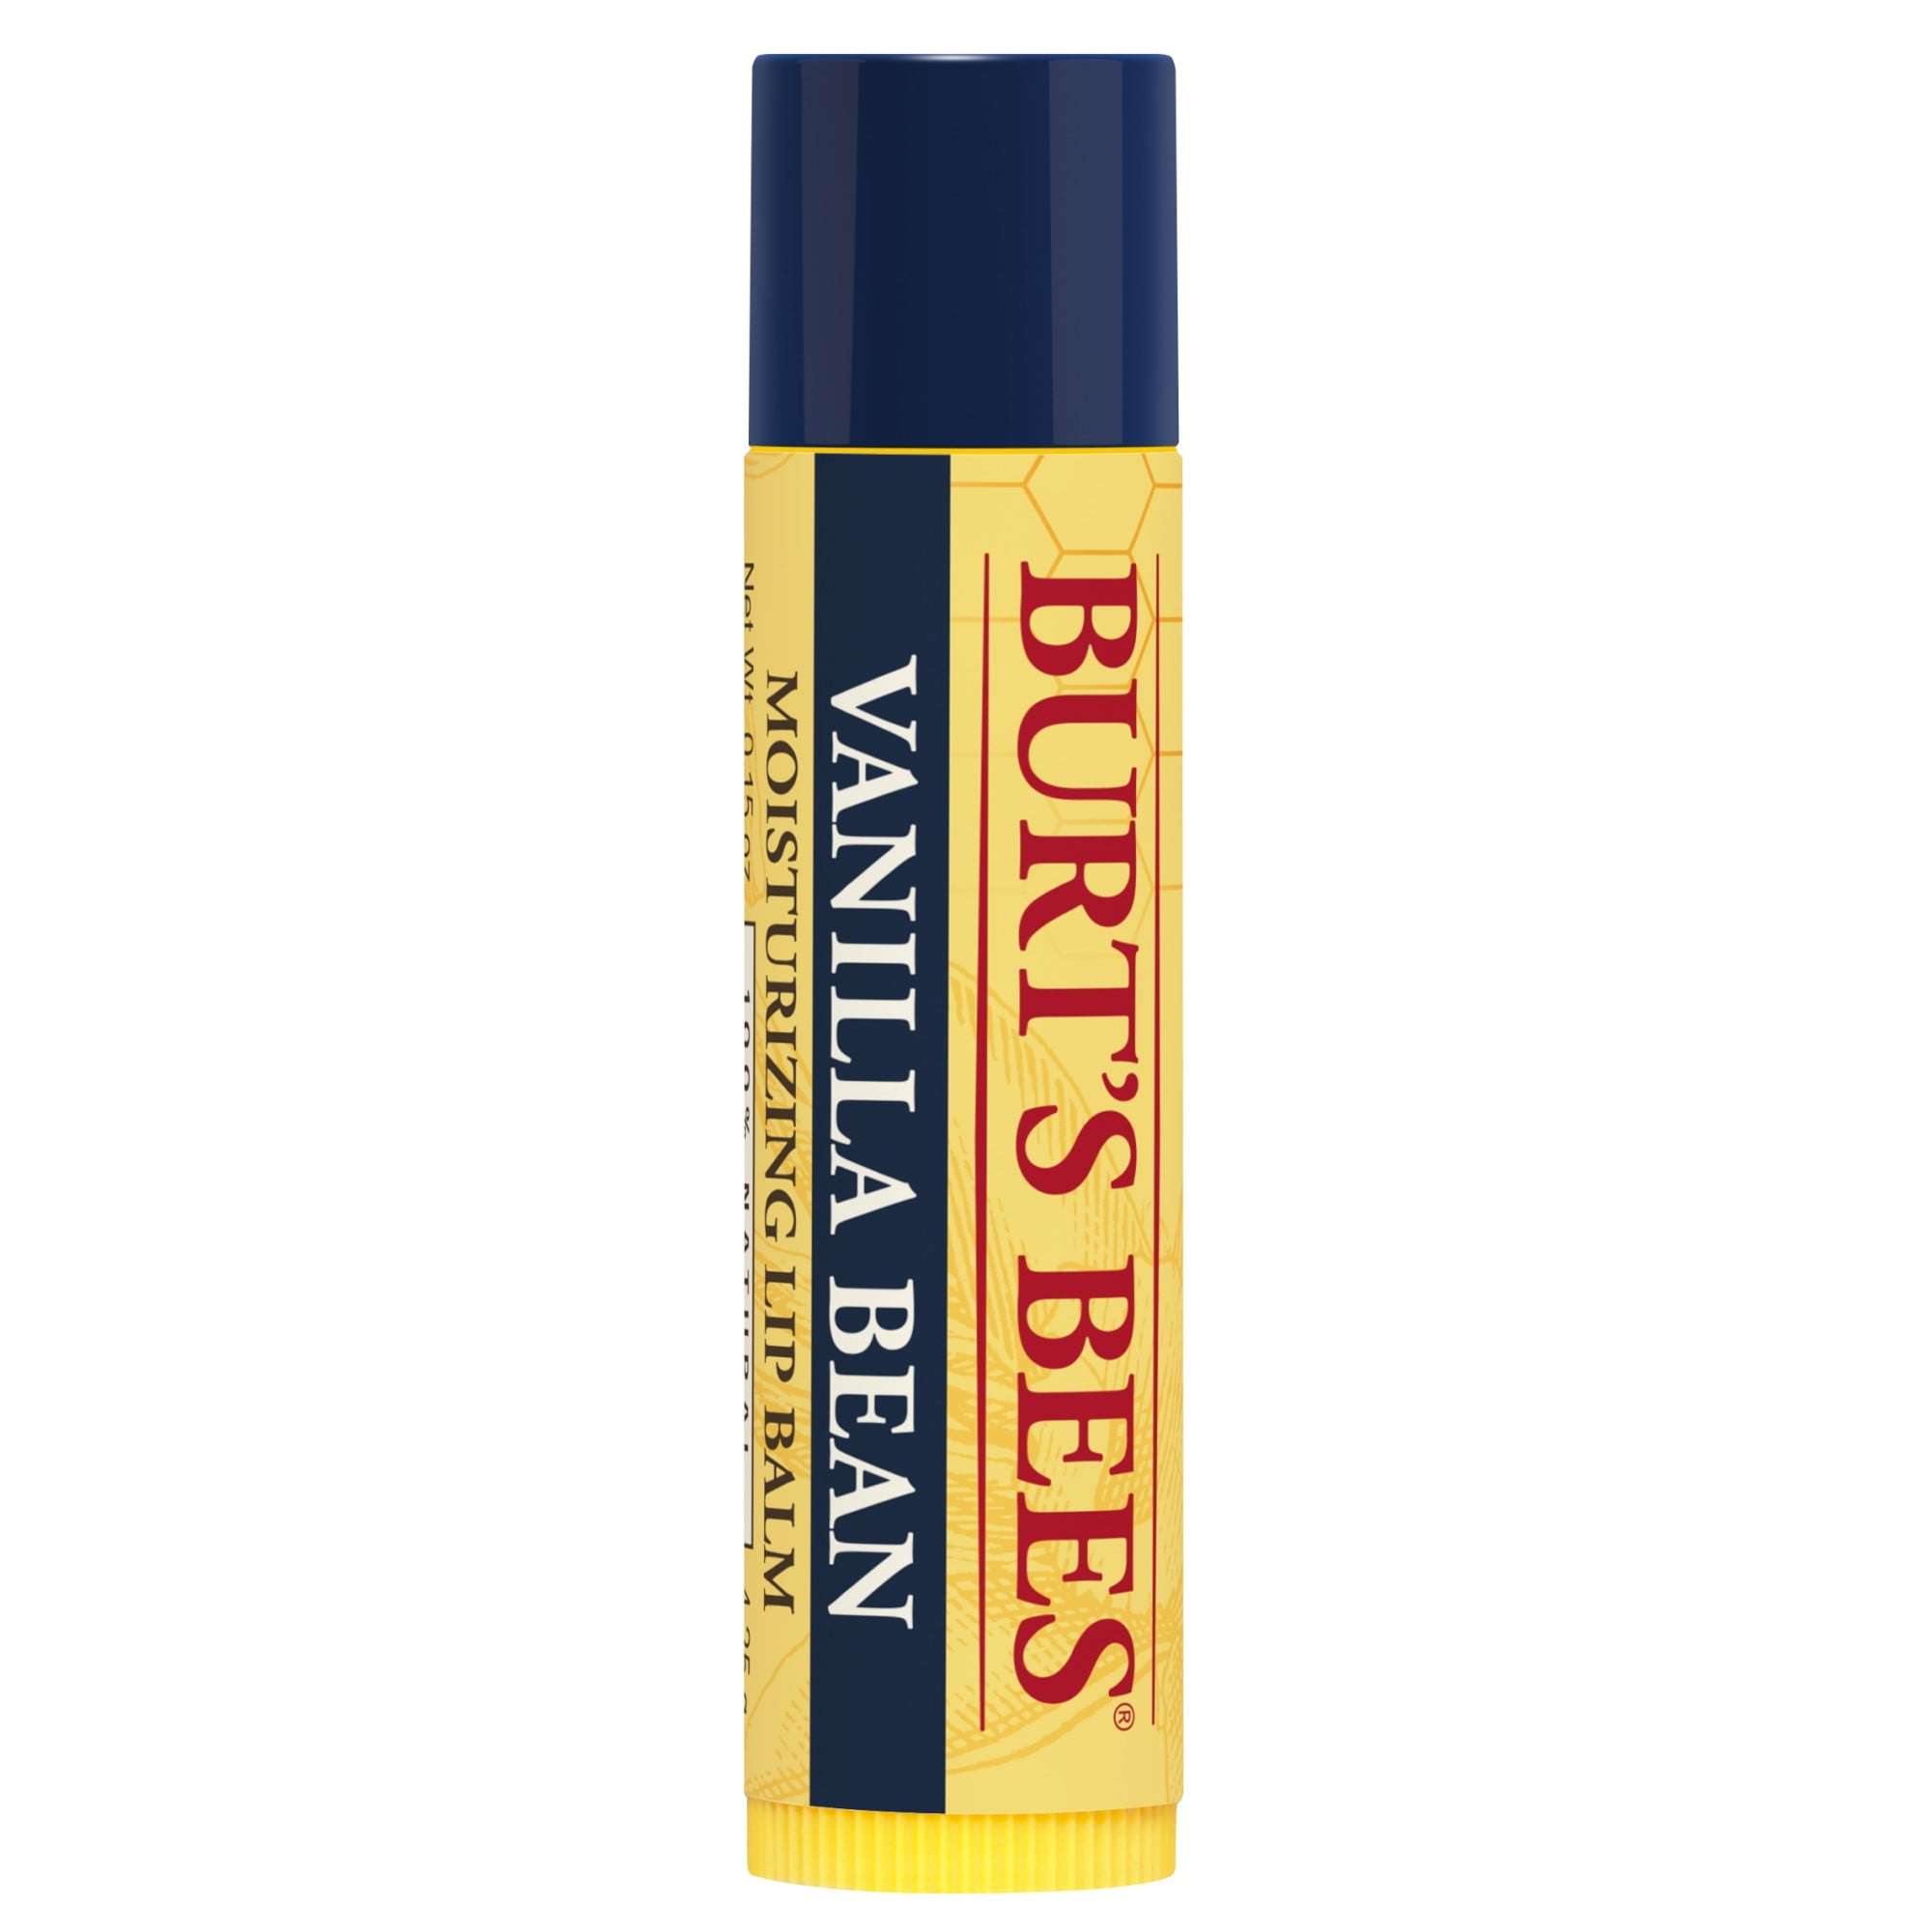 Buy Burts Bees Lip Balm Vanilla Bean online at